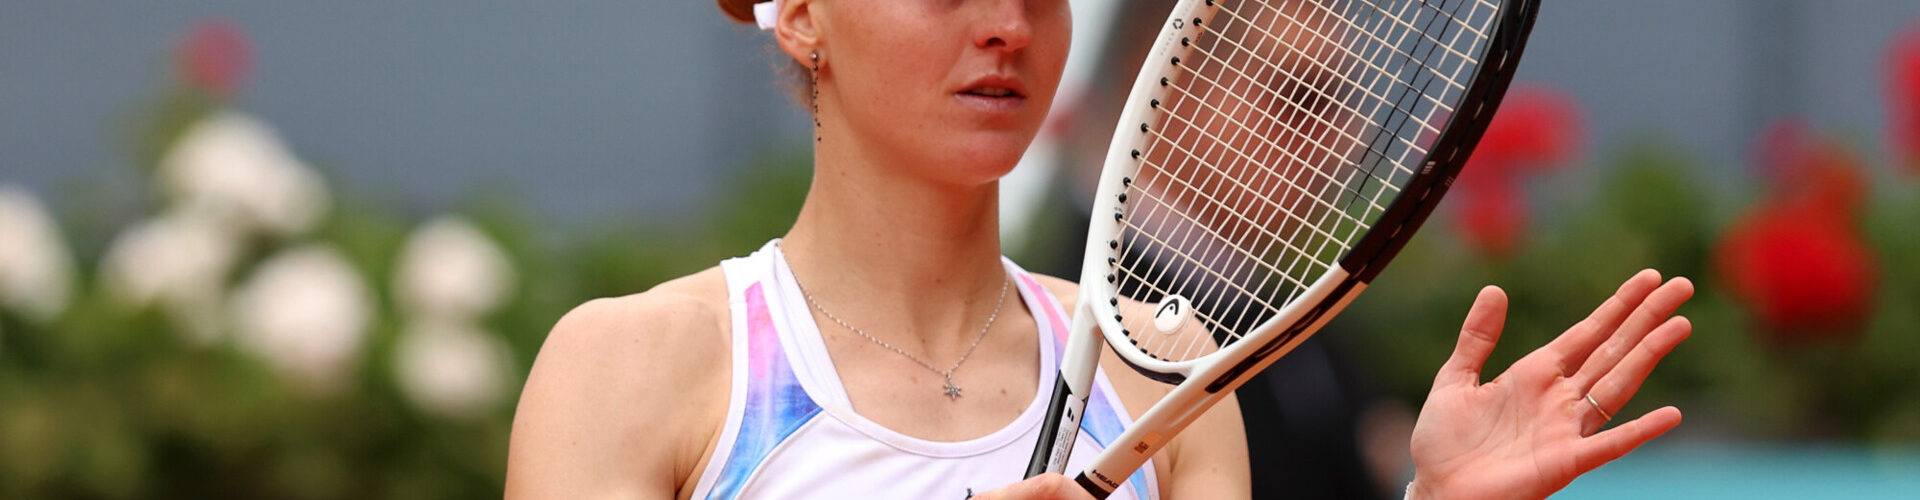 Людмила Самсонова переиграла Наоми Осаку в первом матче турнира в Мадриде